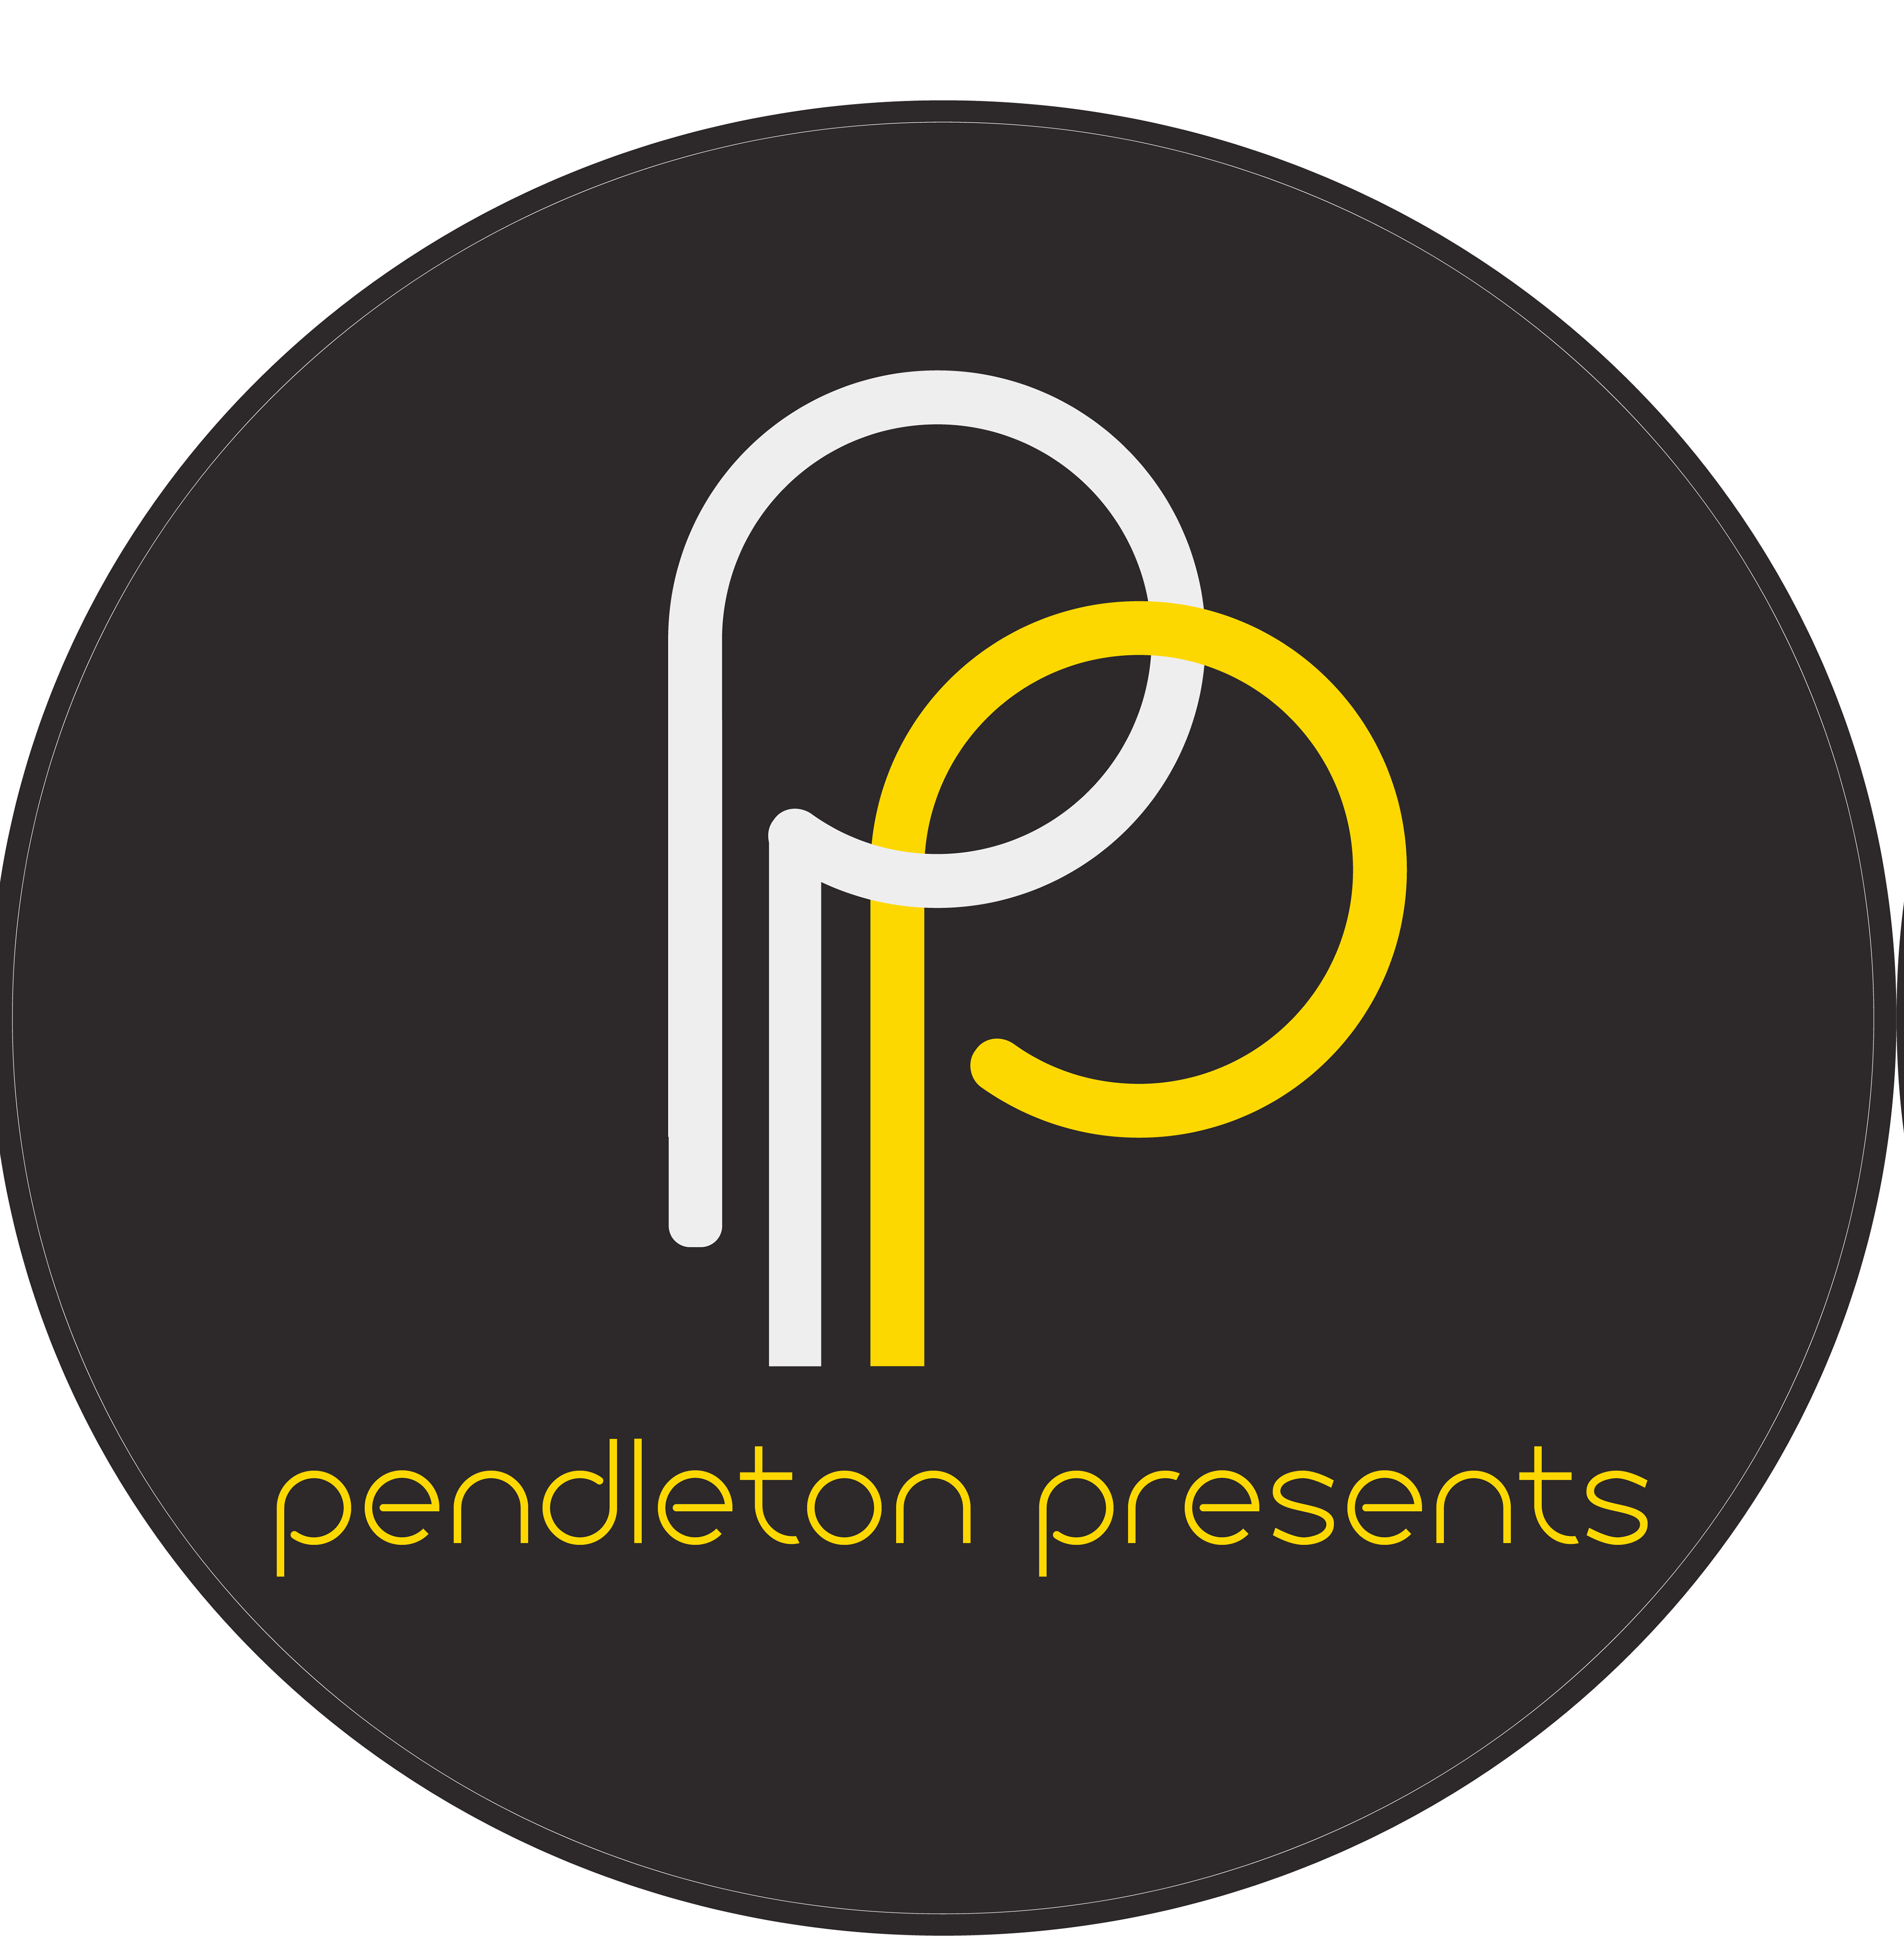 PENDLETON PRESENTS